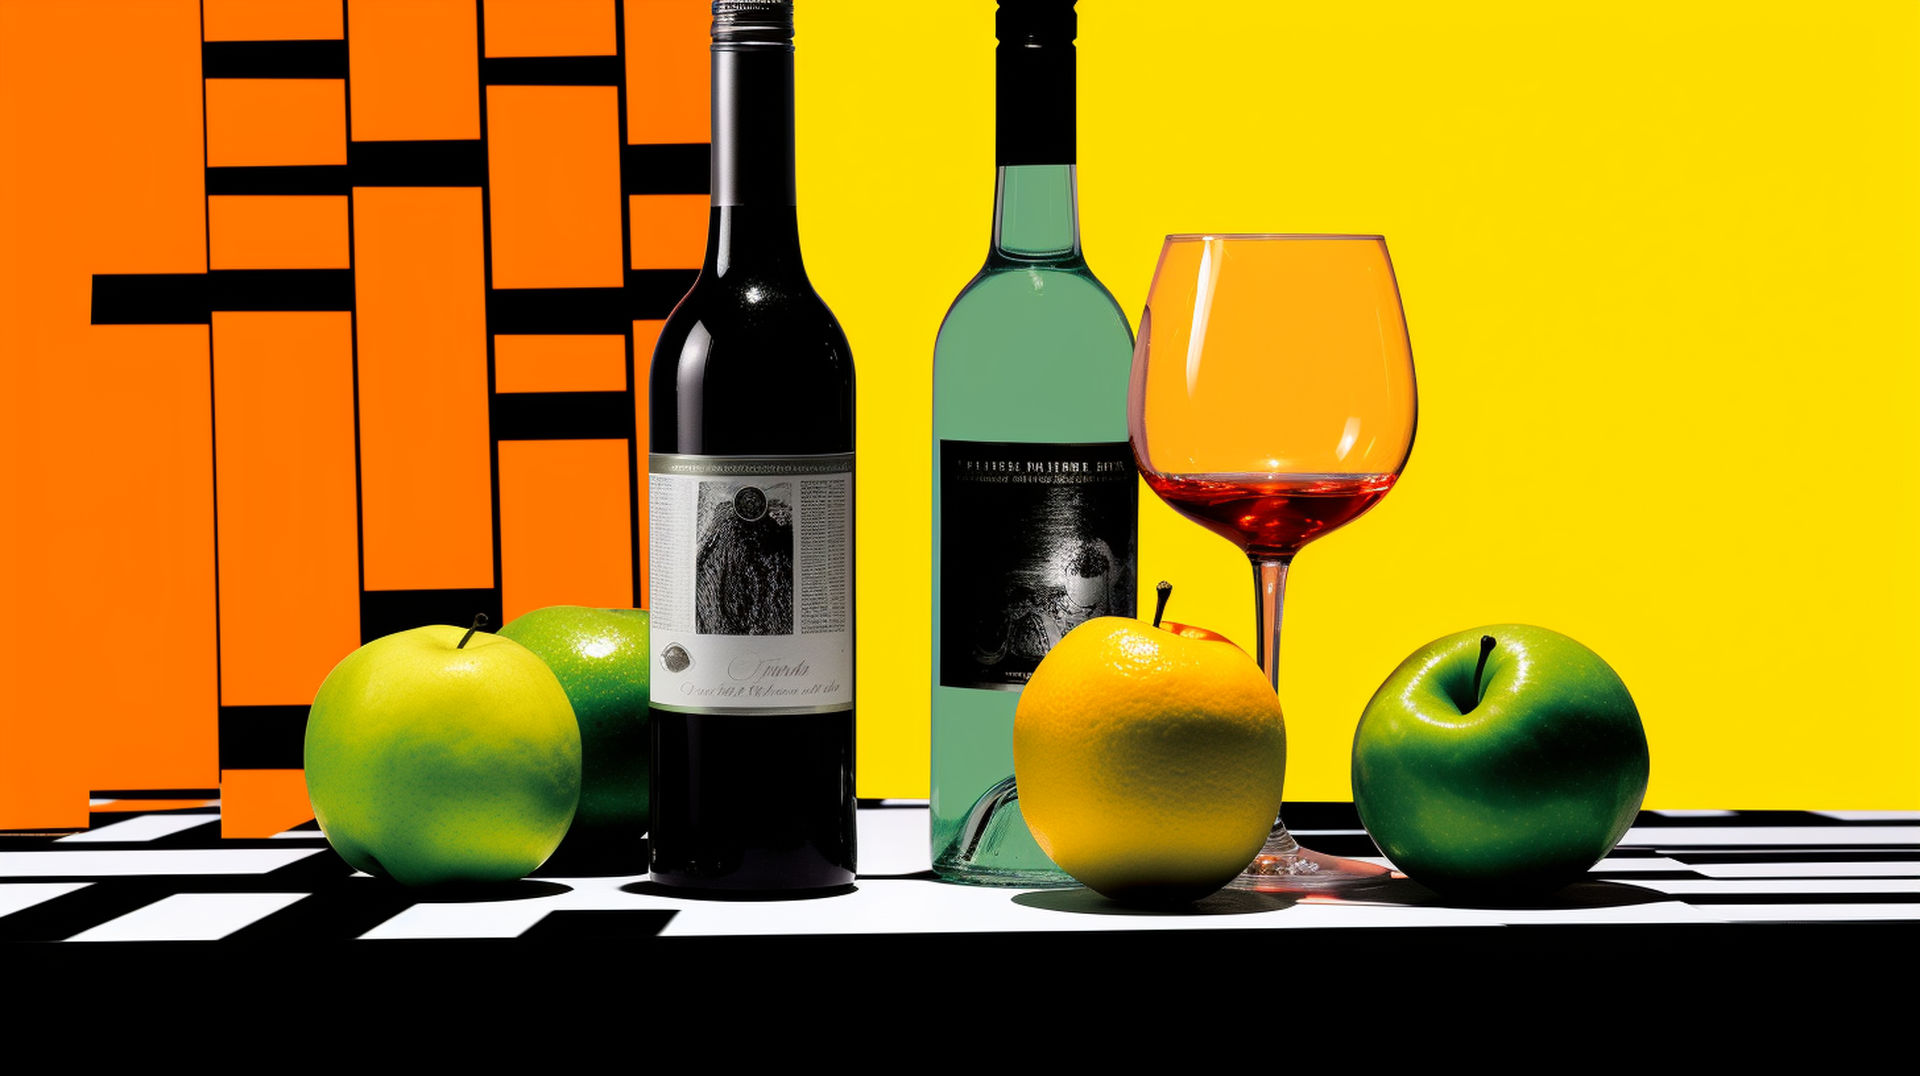 Artistic depiction of Sauvignon Blanc wine's primary flavors